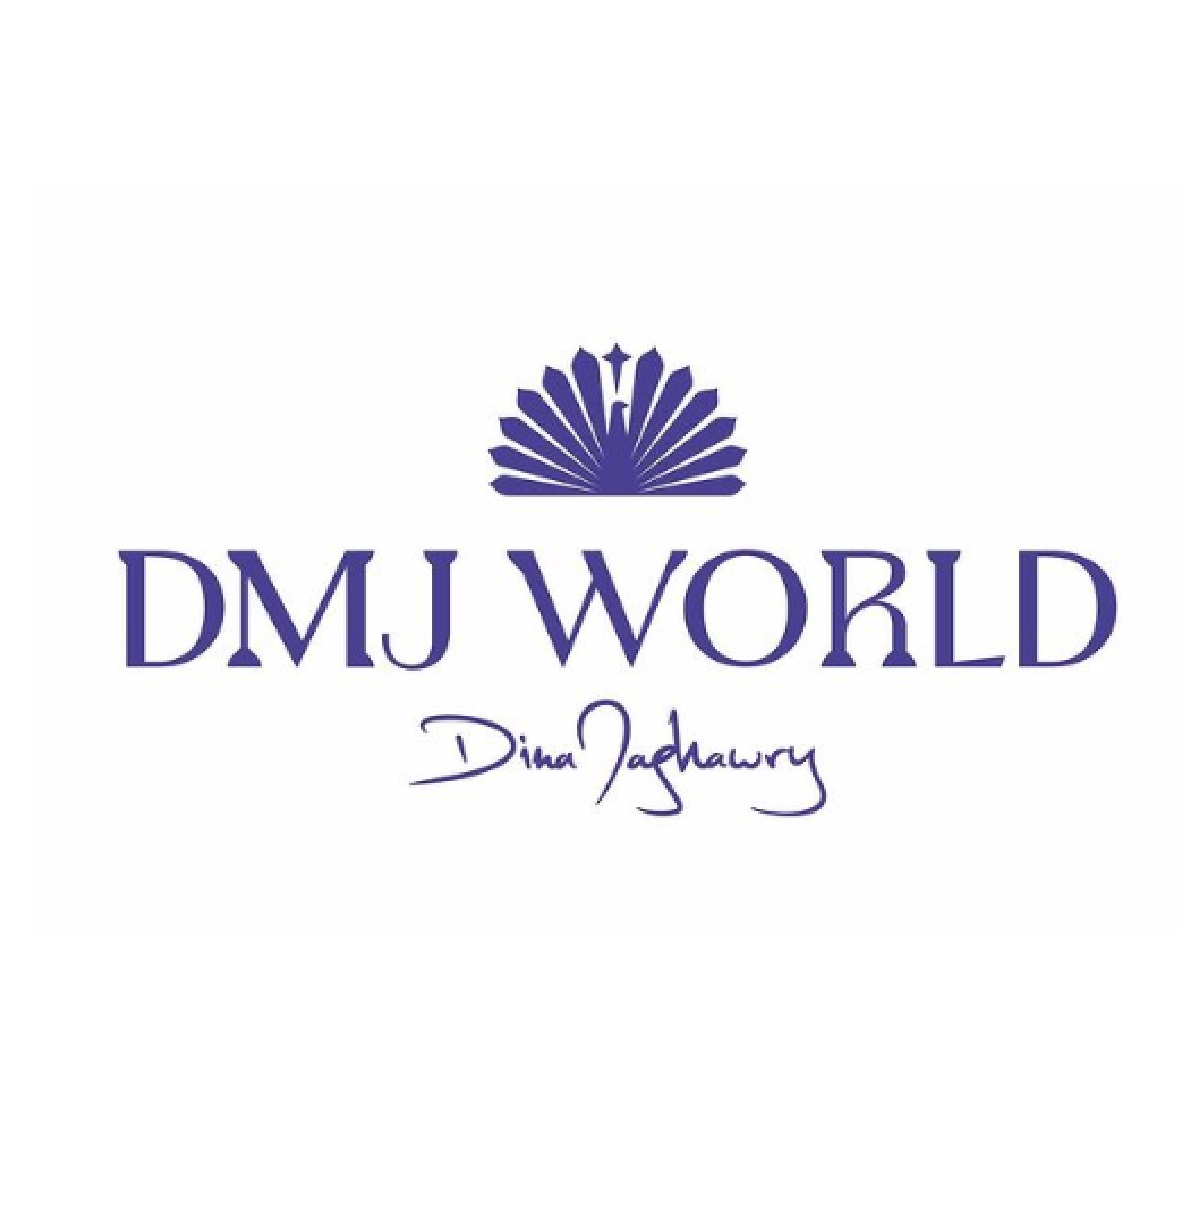 DMJ World